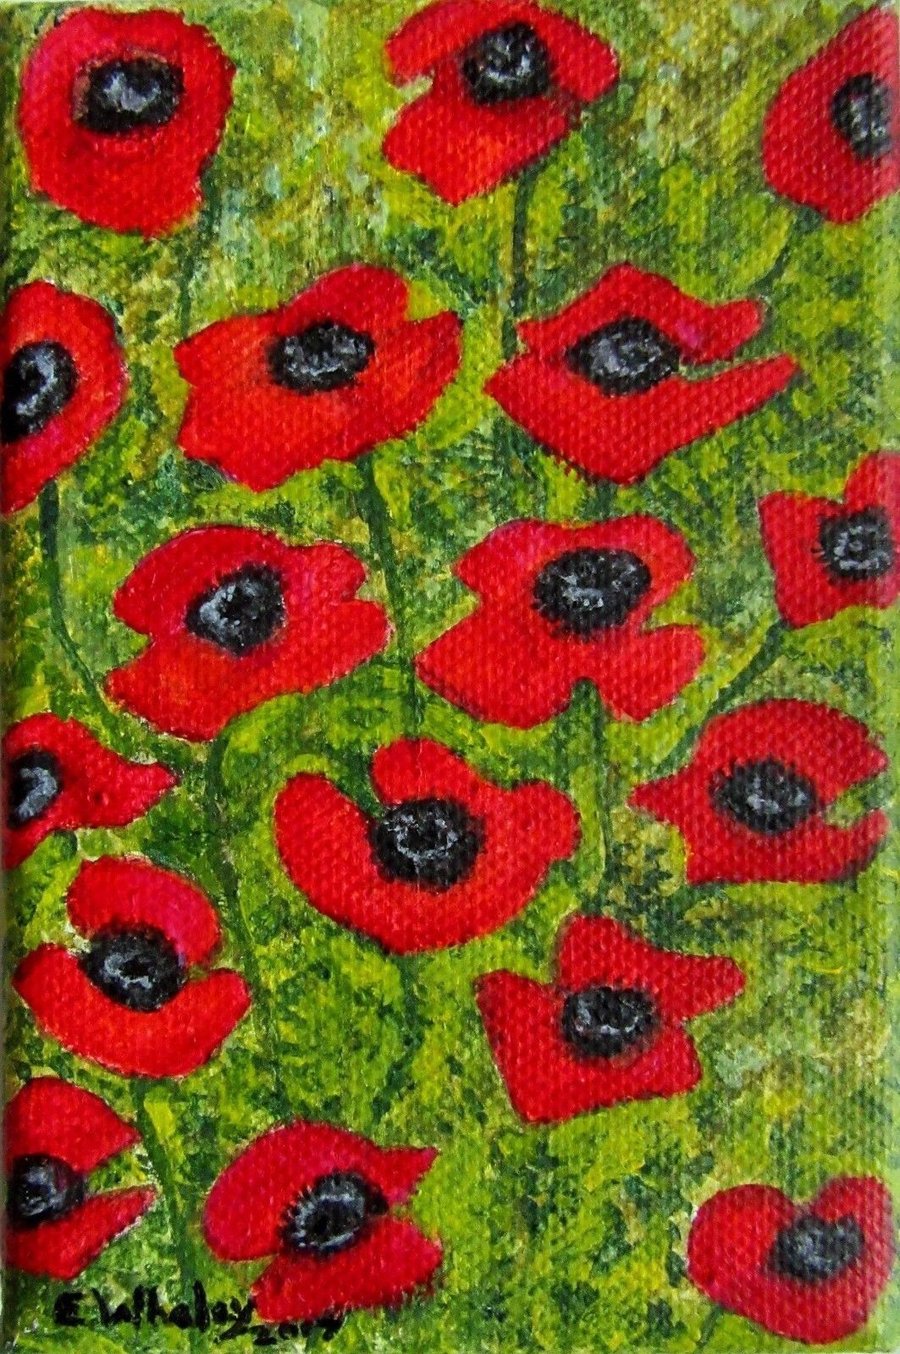 Original Red Poppy Flowers Art Acrylic Painting